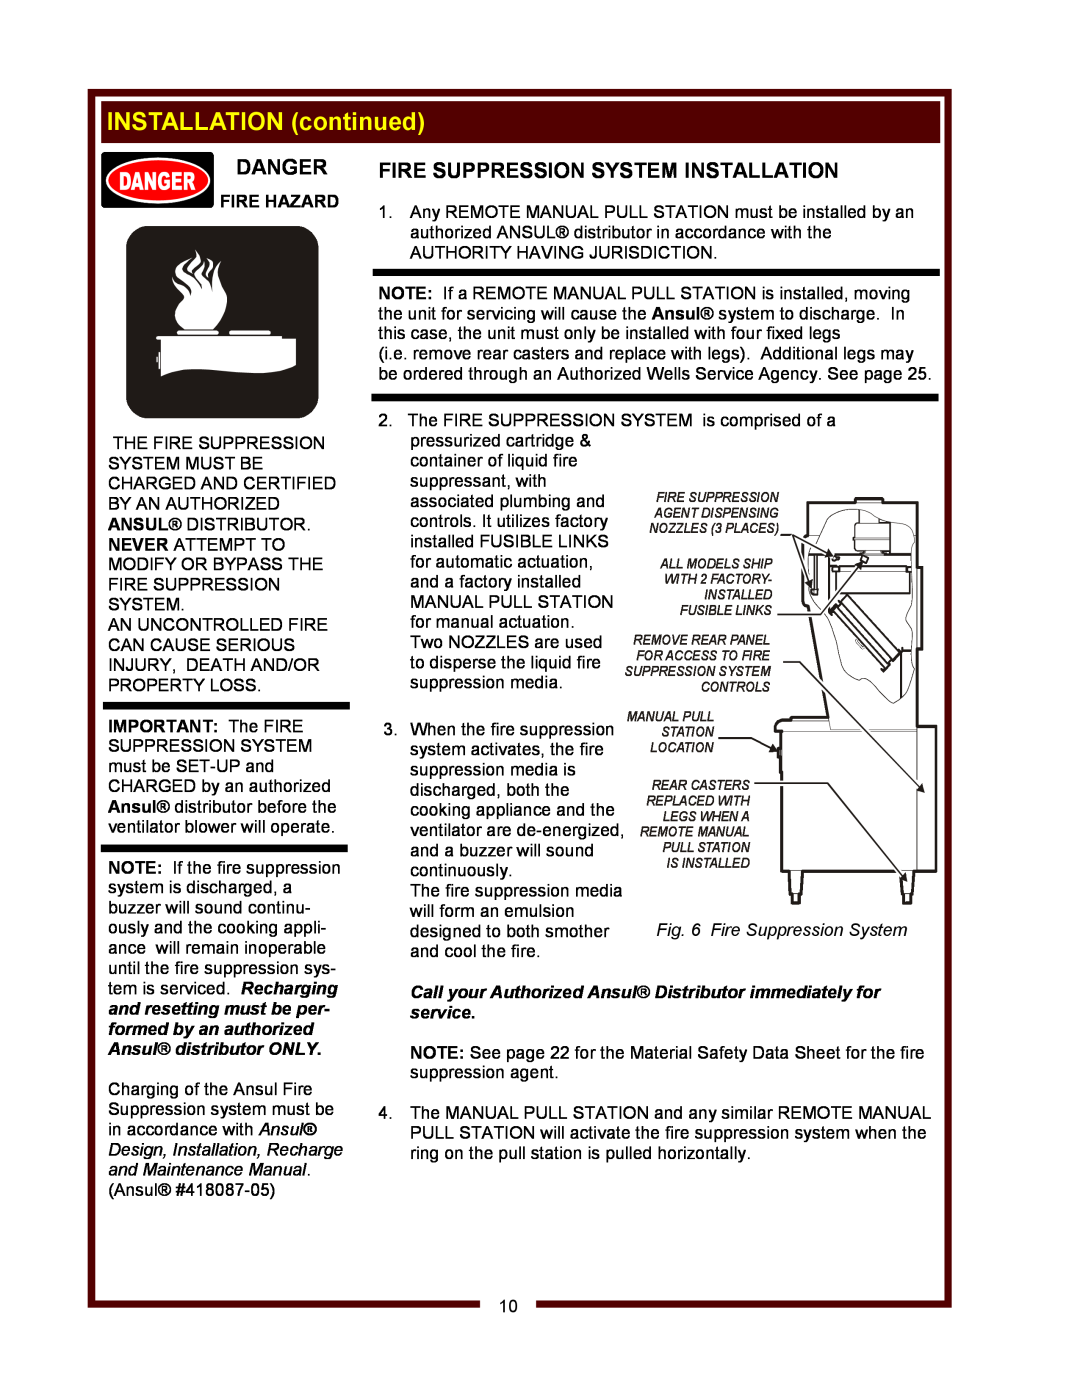 Wells WV-4HSRW operation manual Fire Suppression System Installation, INSTALLATION continued, Danger, Fire Hazard 